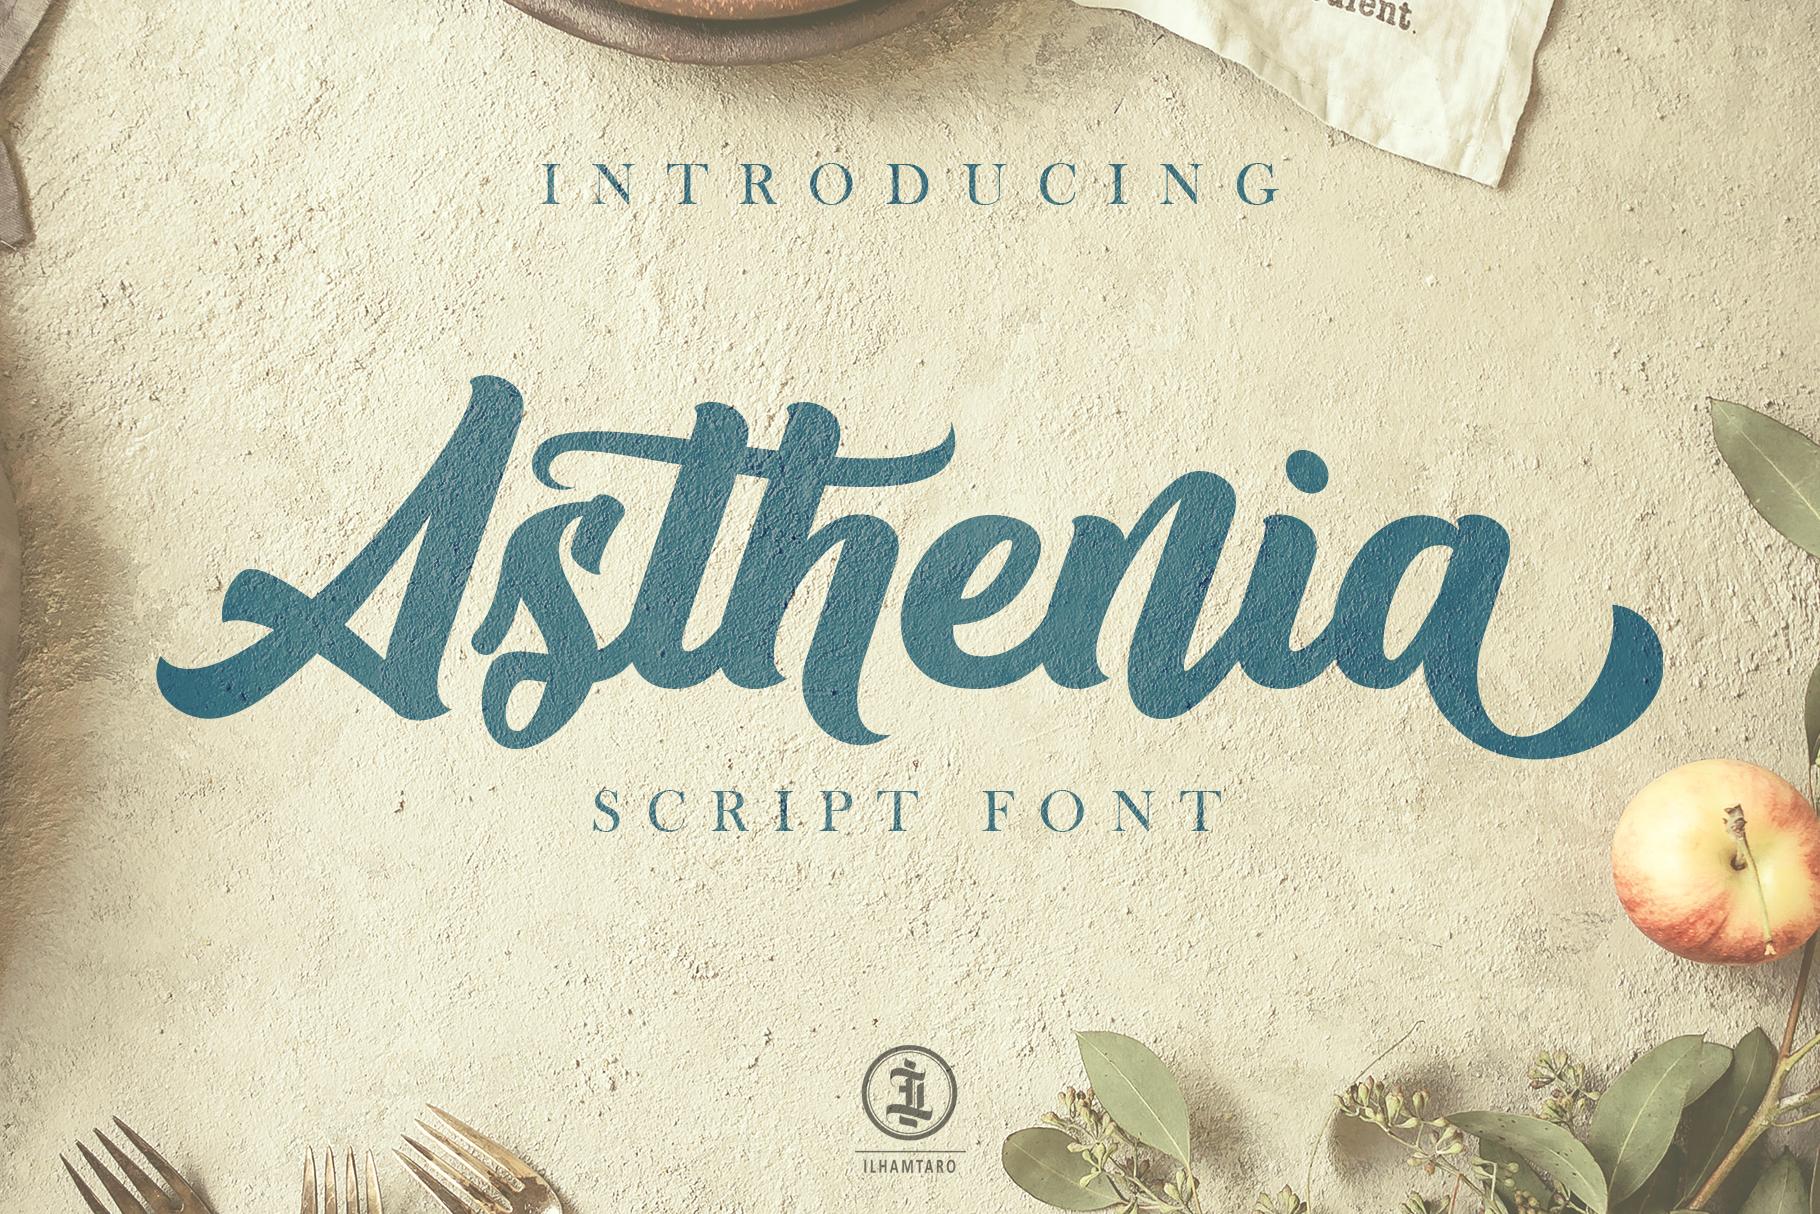 Asthenia Font